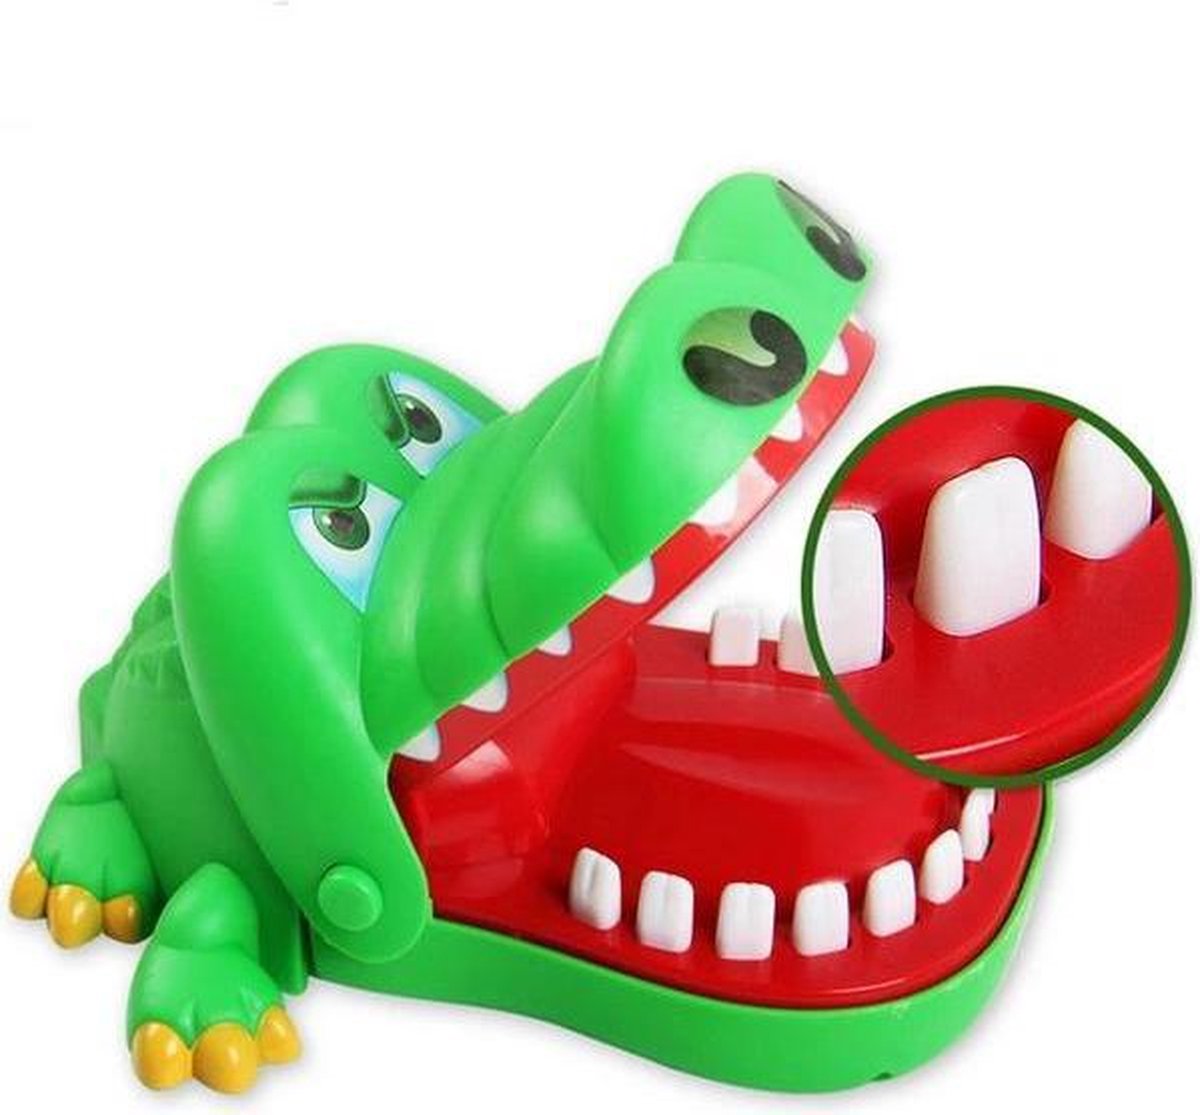 Spel Bijtende Krokodil – Reis editie – Krokodil met Kiespijn - Merkloos